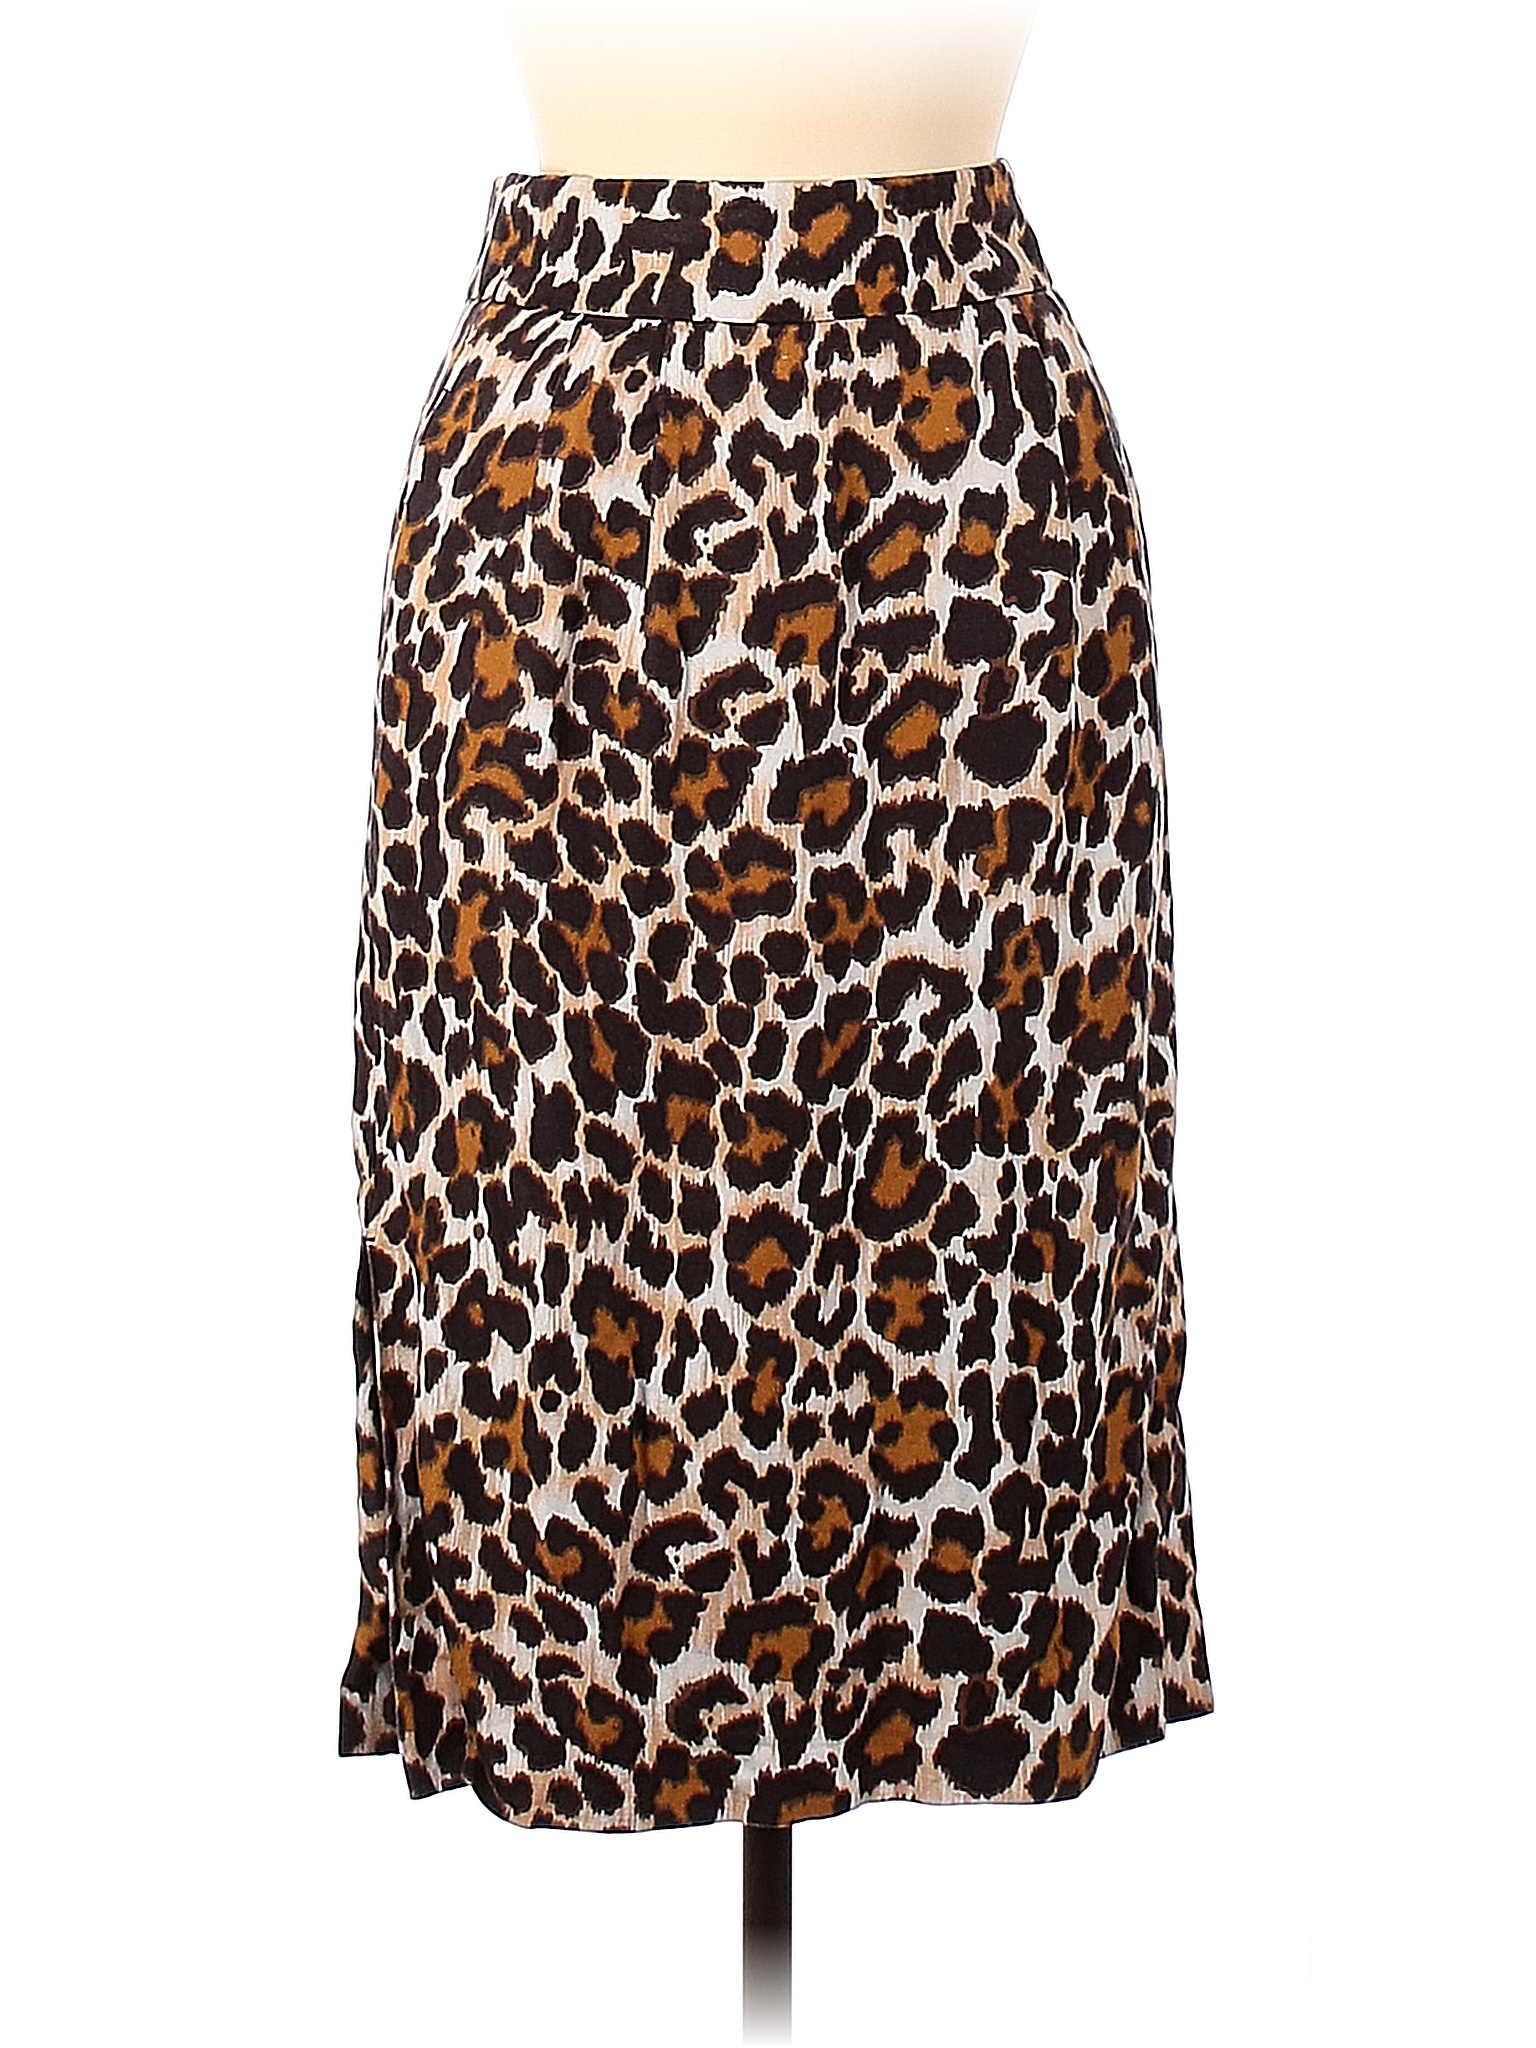 J.Crew Animal Print Brown Leopard Pencil Skirt Size 2 - 72% off 